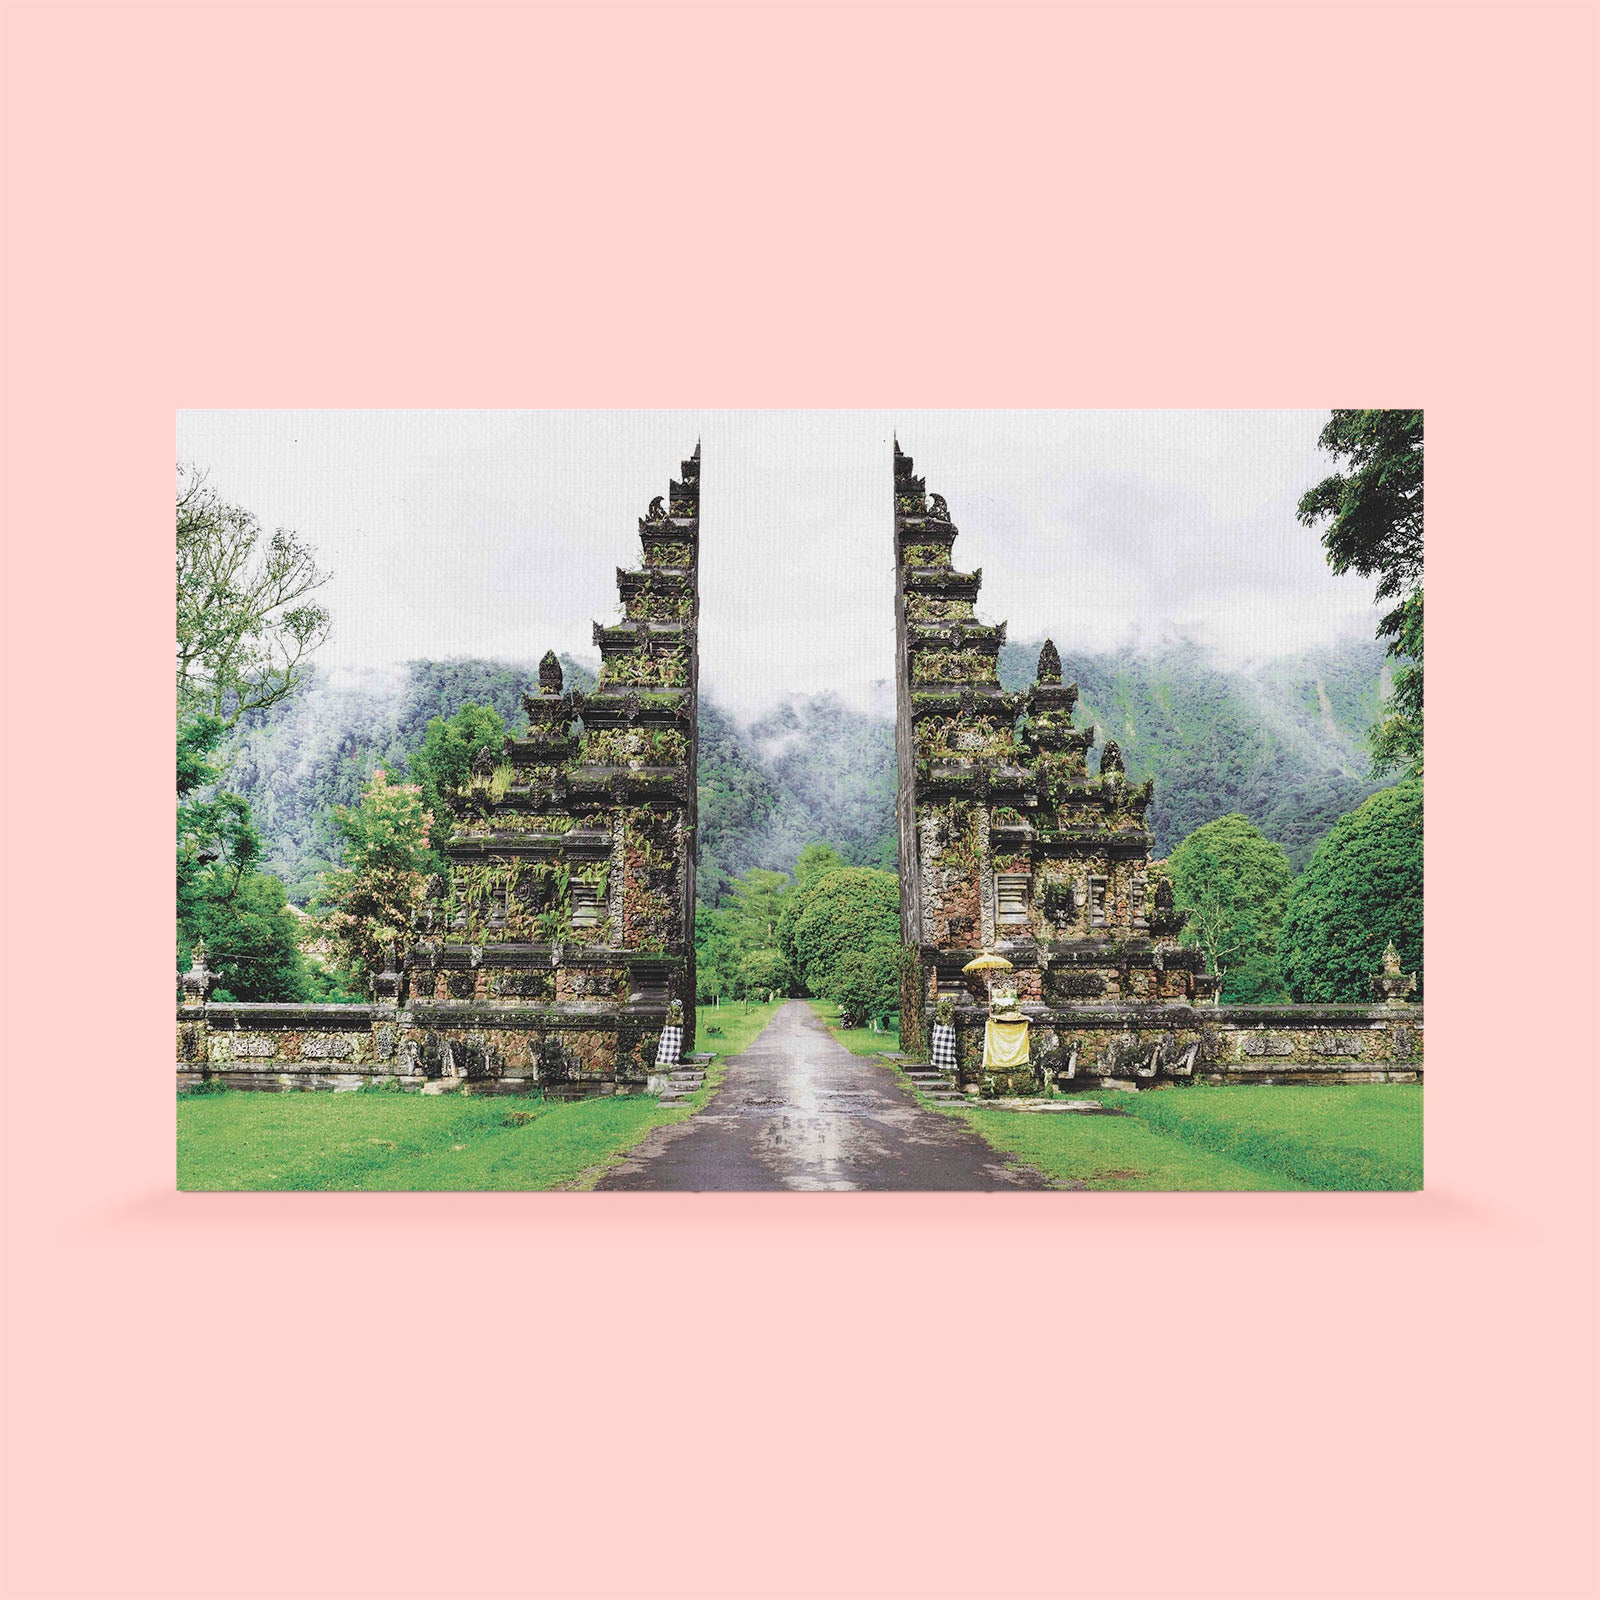 Bali's Iconic Gate